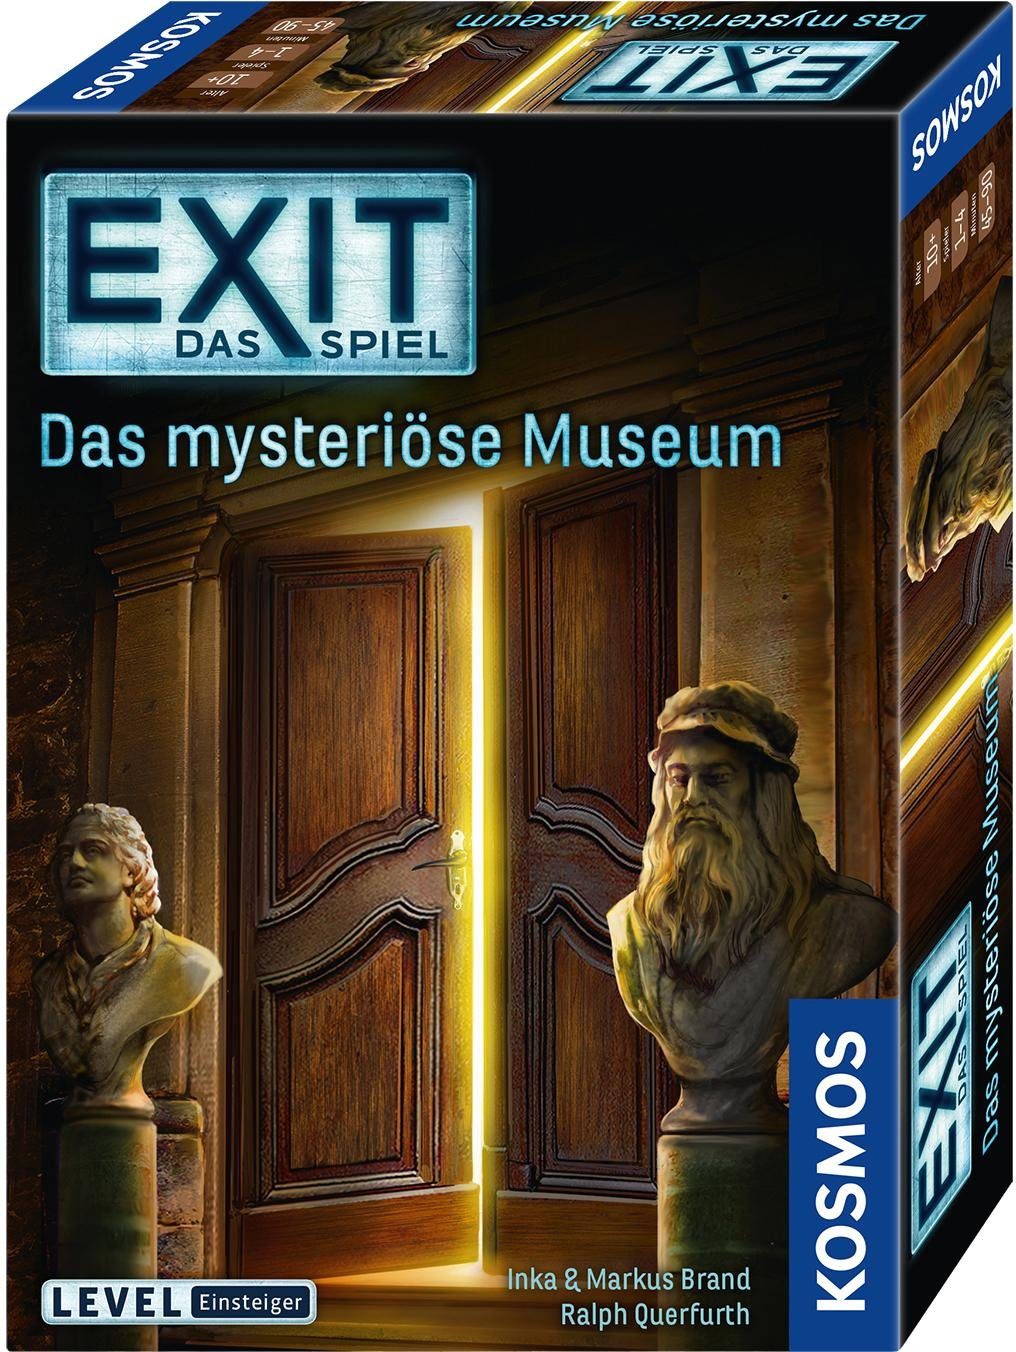 Kosmos Spiel, EXIT - Das mysteriöse Museum, Made in Germany